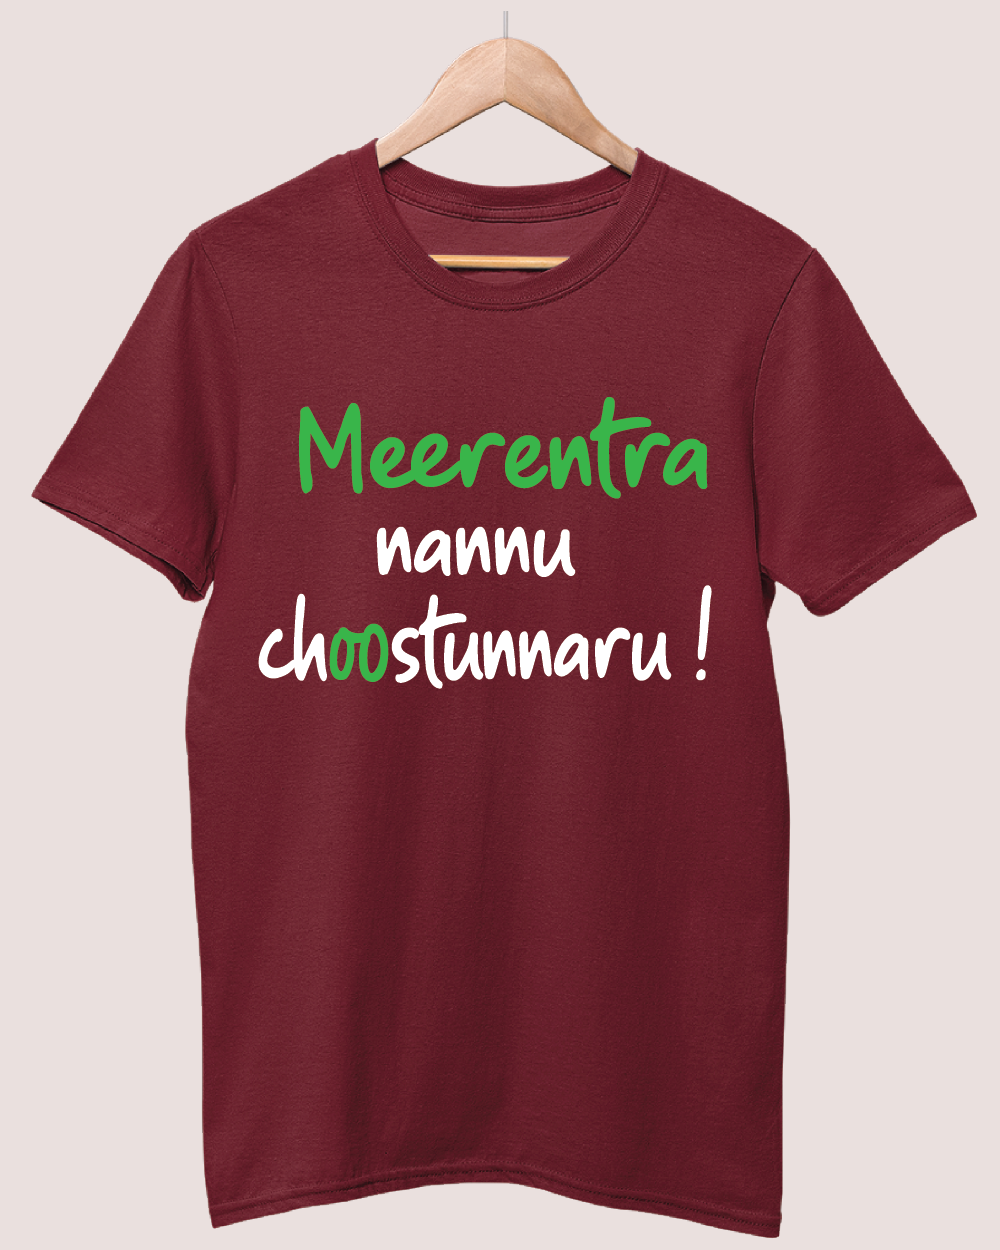 Meerentra Nannu Choostunnaru T-shirt